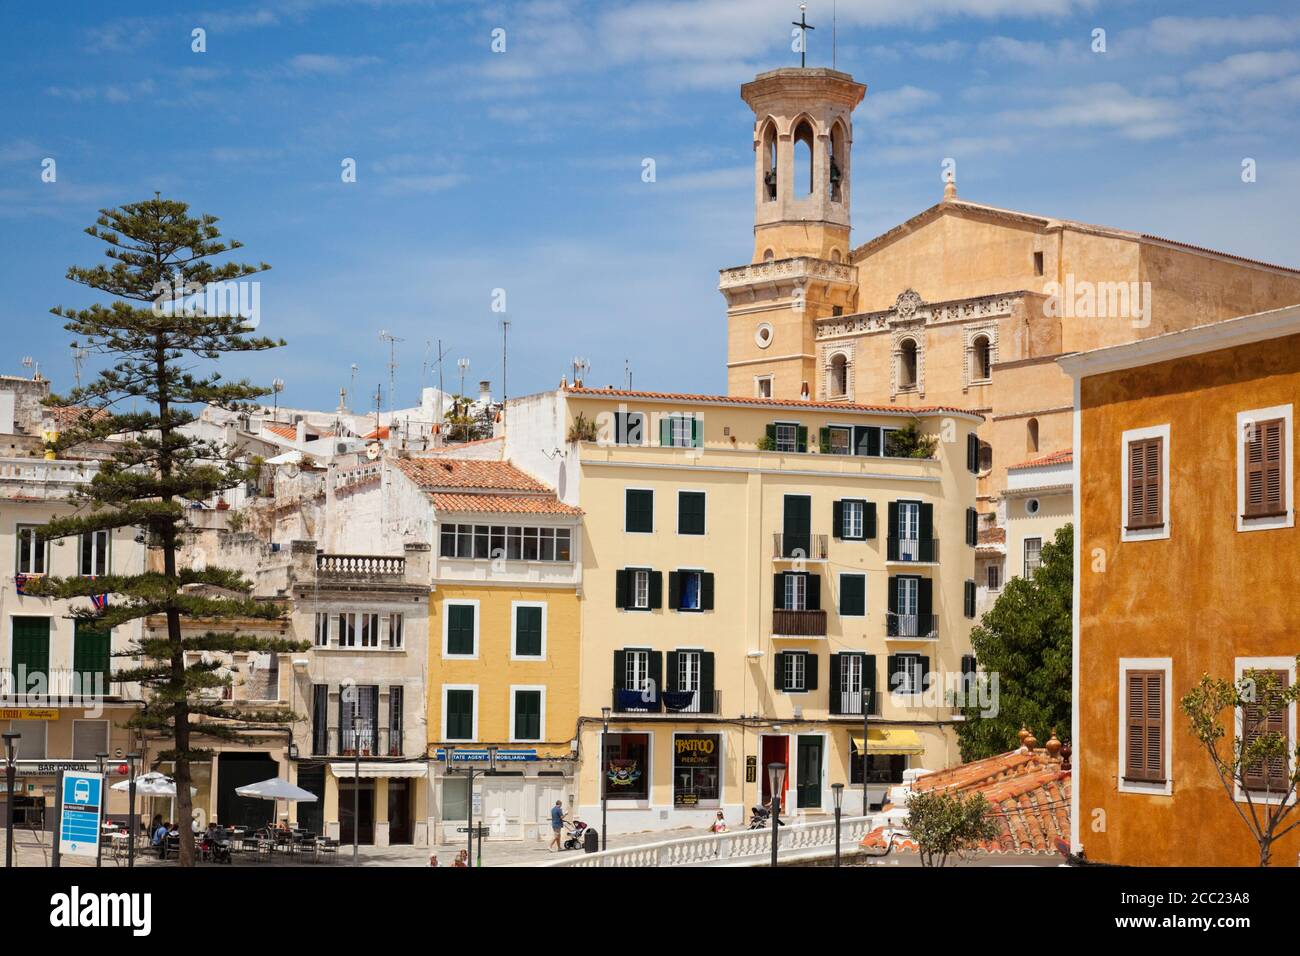 Spagna, Menorca, vista di Plaça Espanya e Chiesa di Santa Maria in background Foto Stock